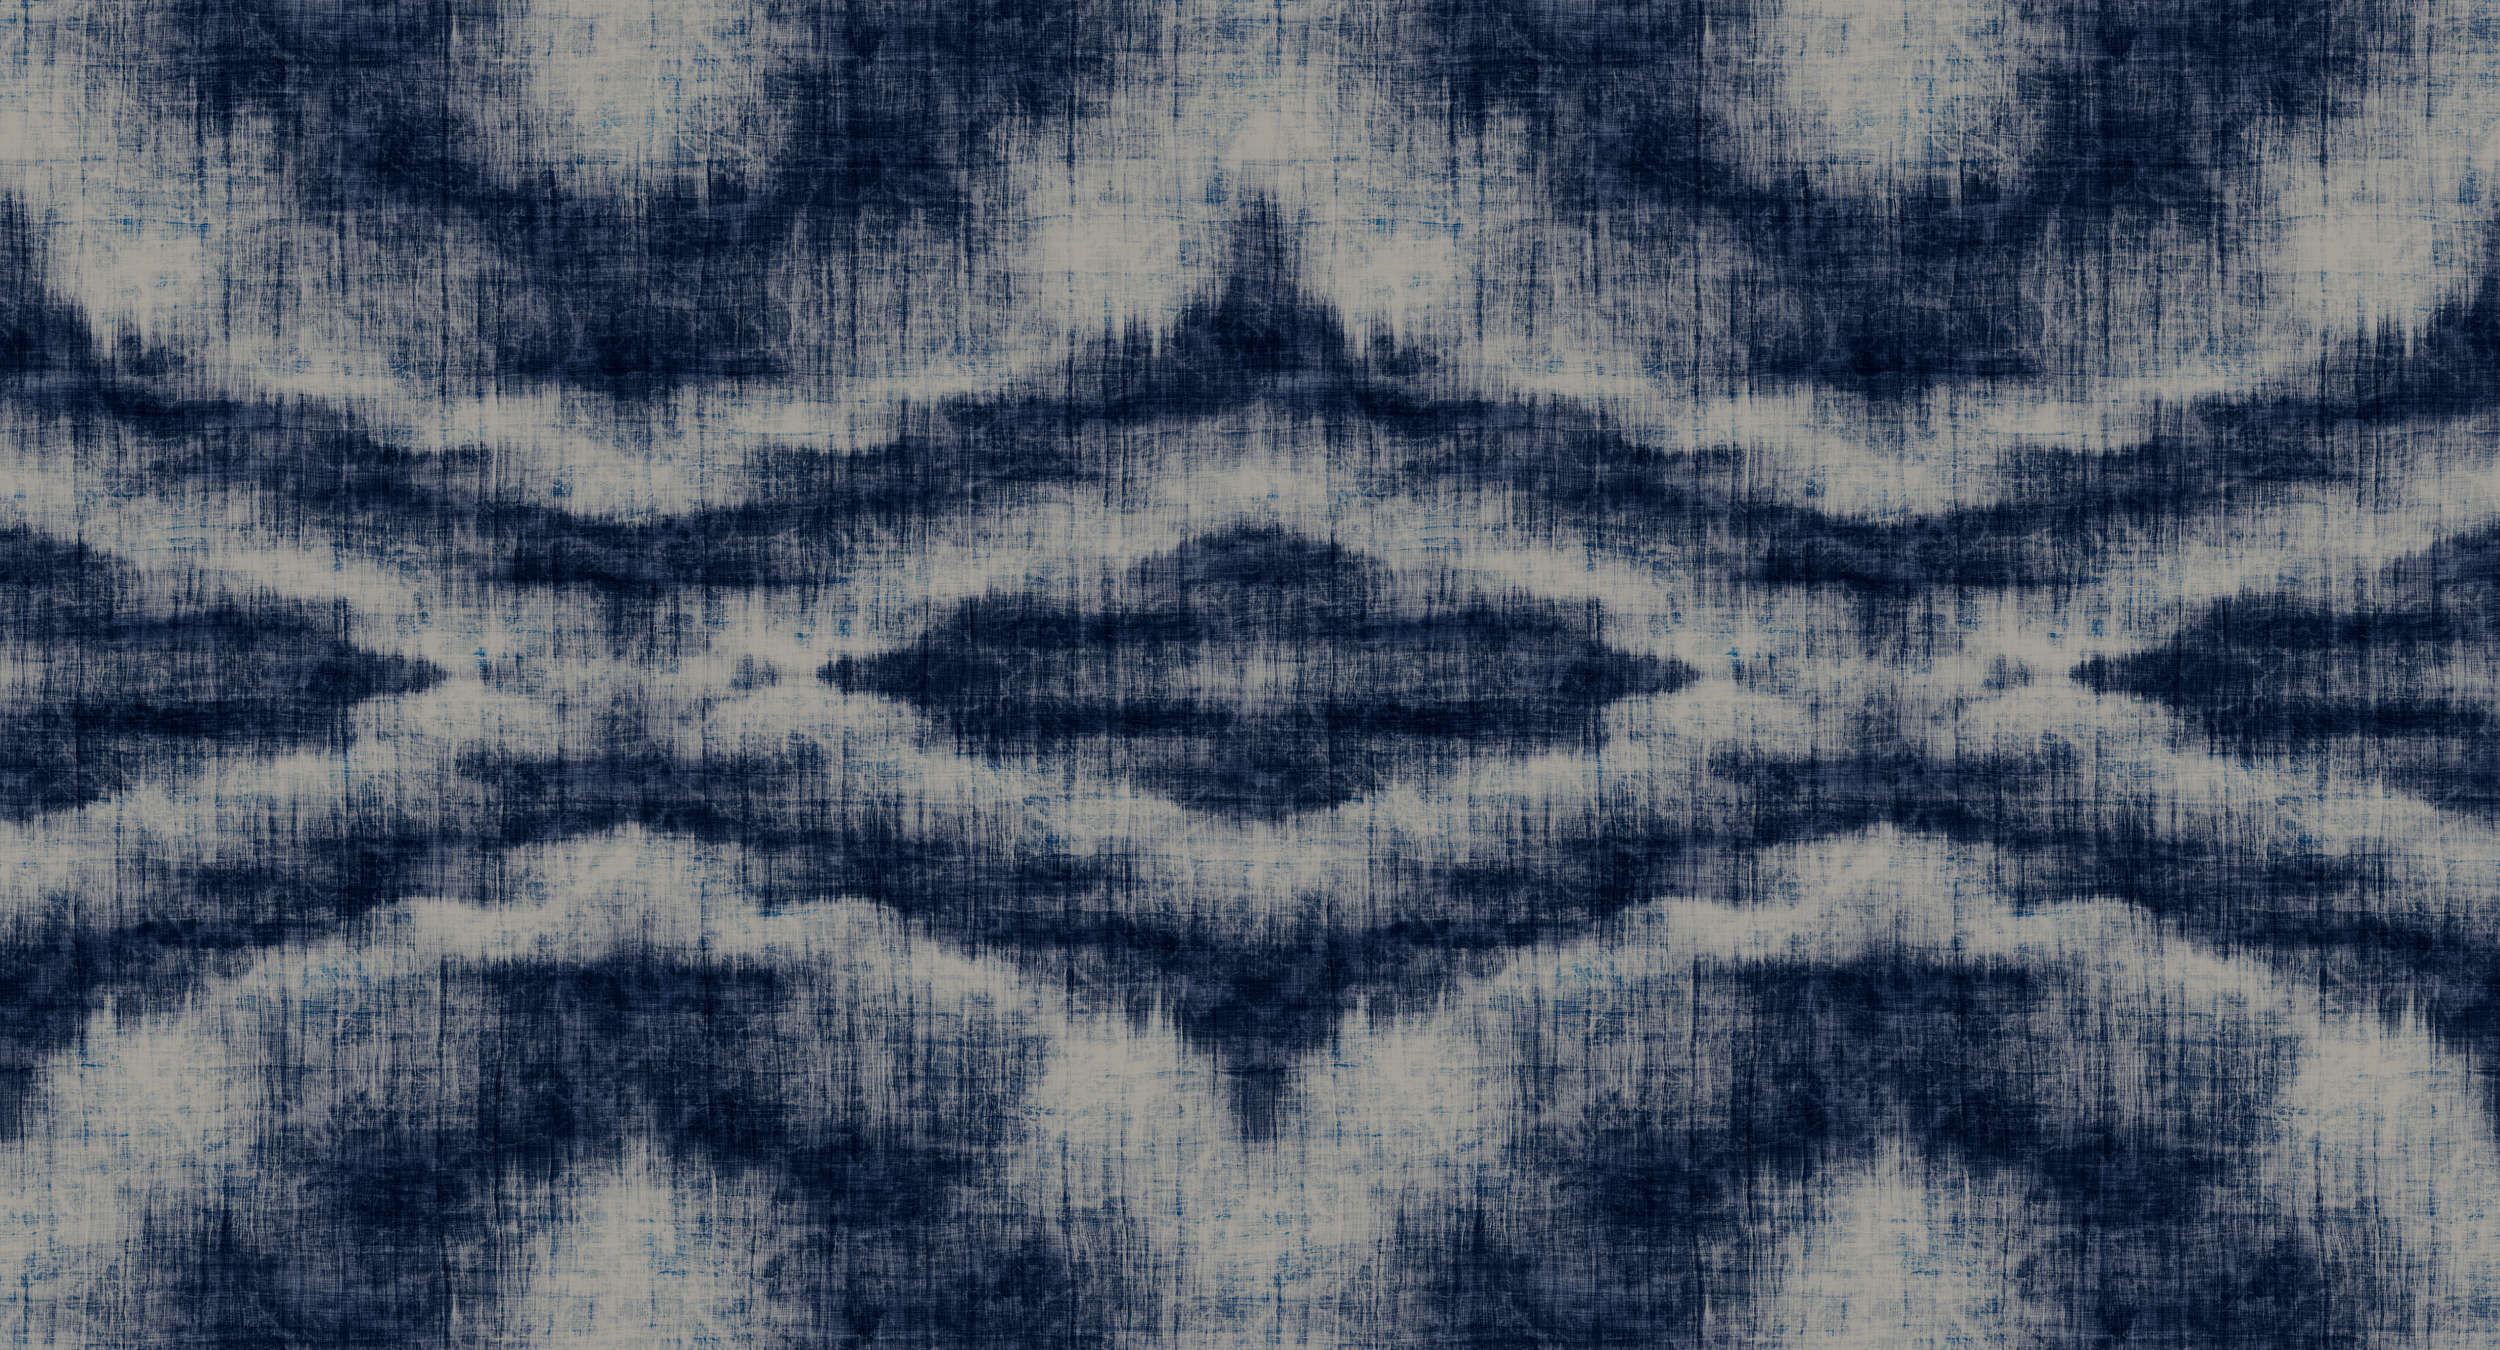             Fototapete Abstraktes Ikkat-Muster mit Textileffekt
        